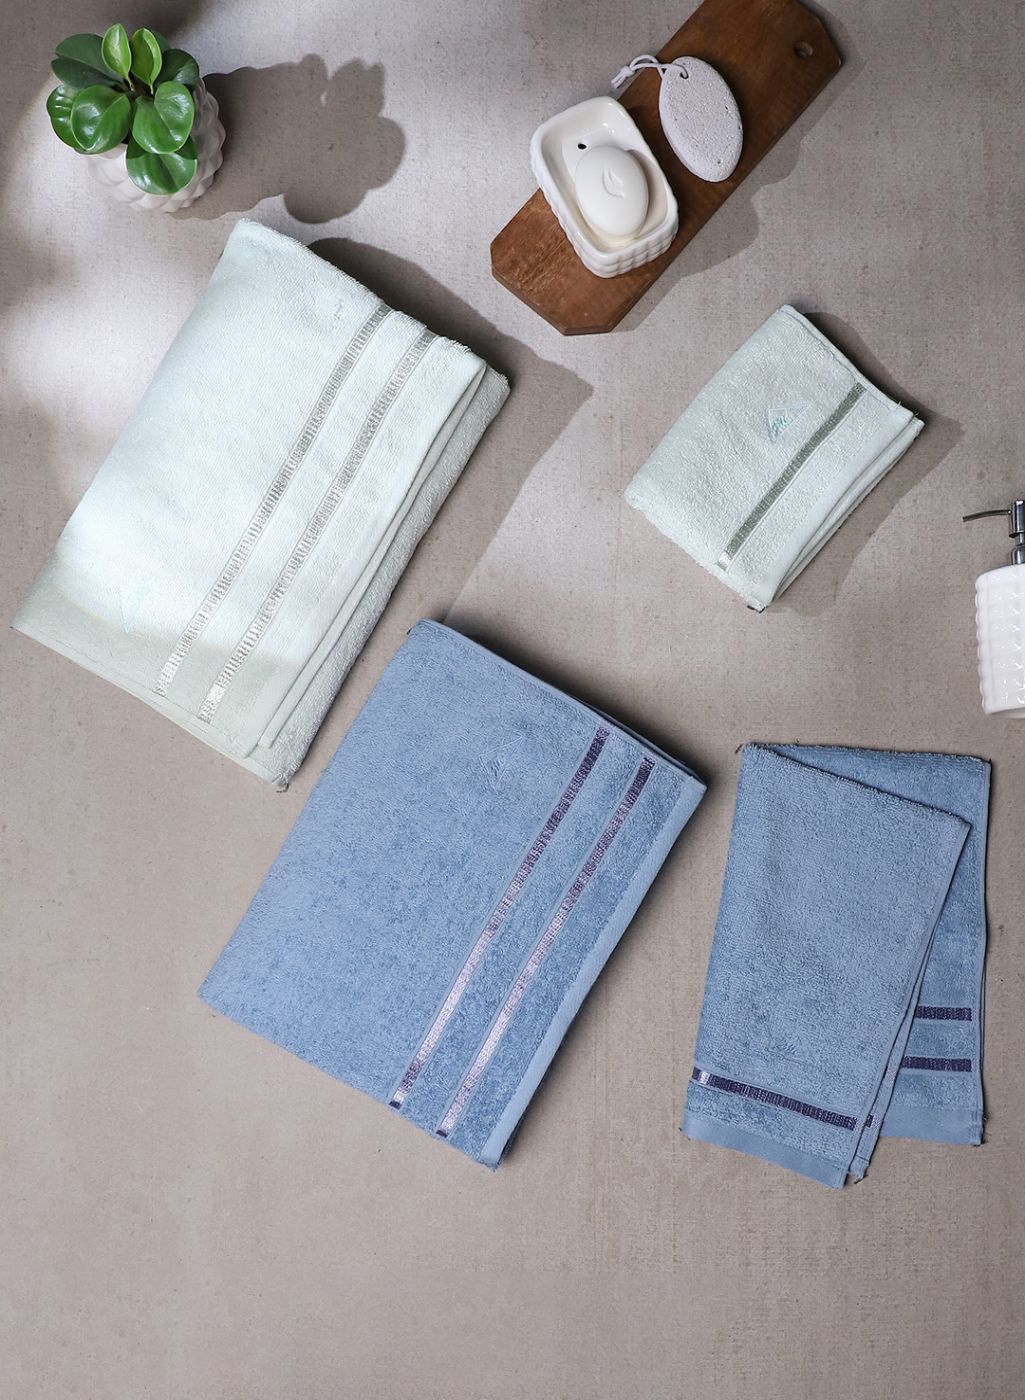 Blue & Green Cotton 525 GSM Towel Set Pack of 4 (2 Bath & 2 Hand Towels)